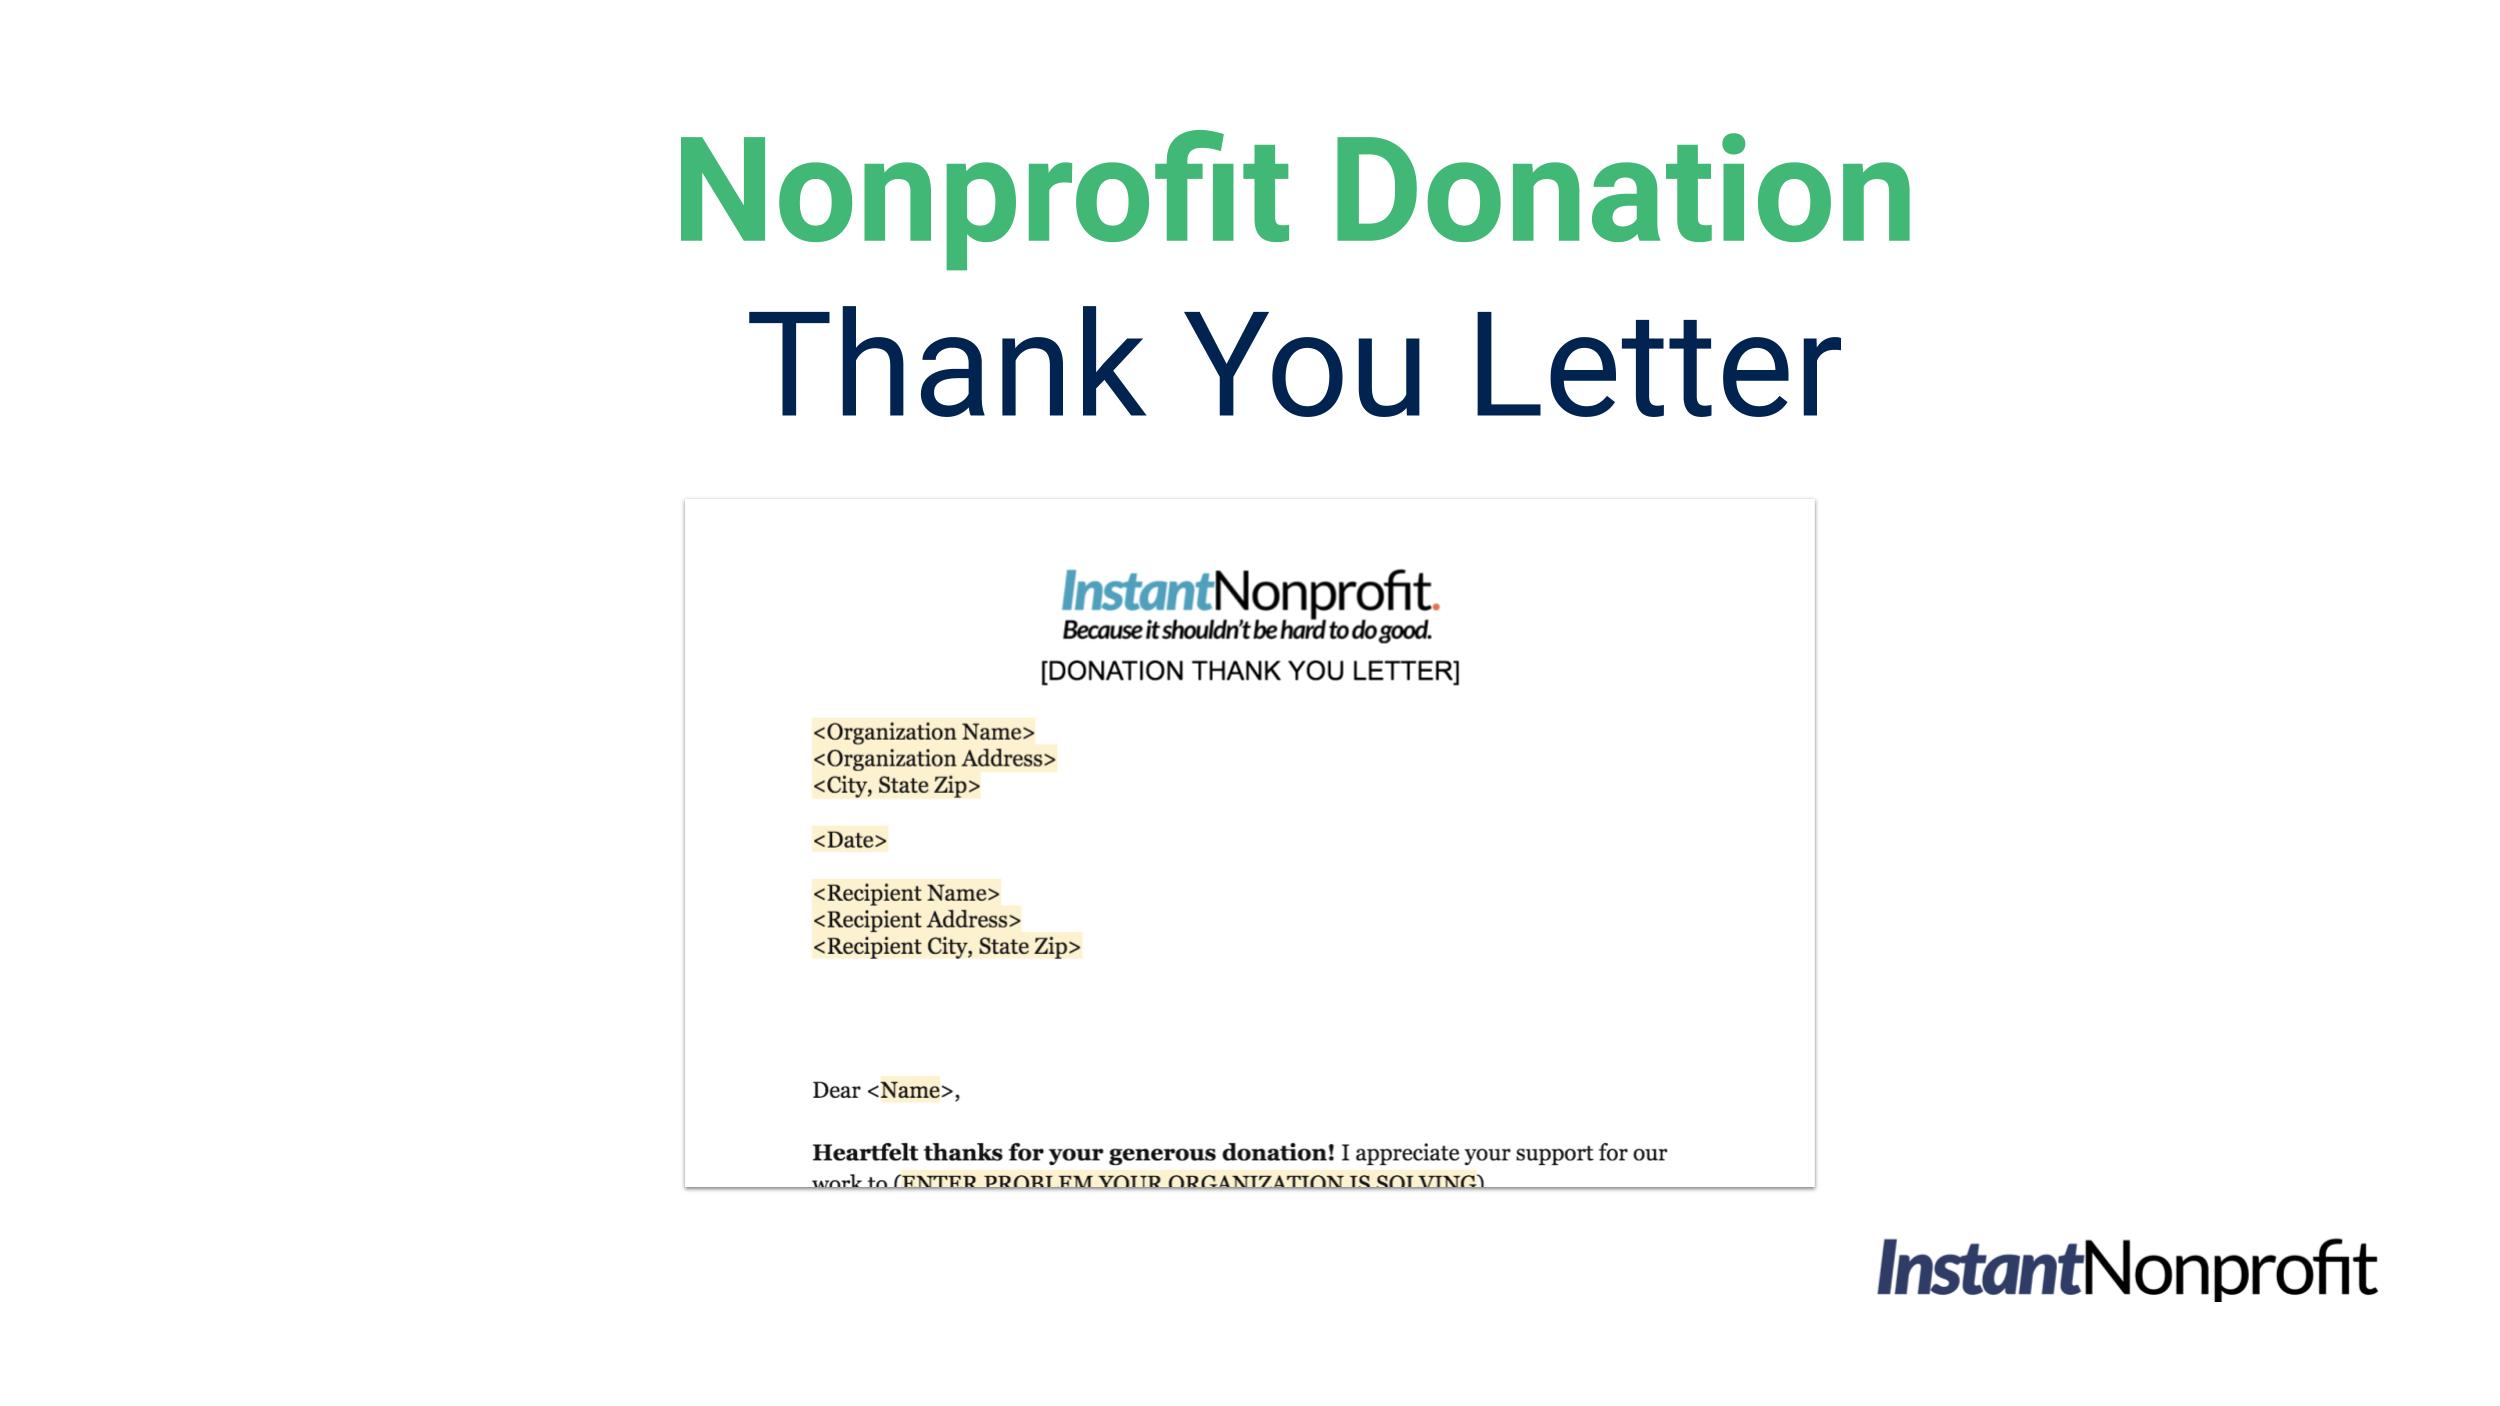 Nonprofit Donation Thank You Letter